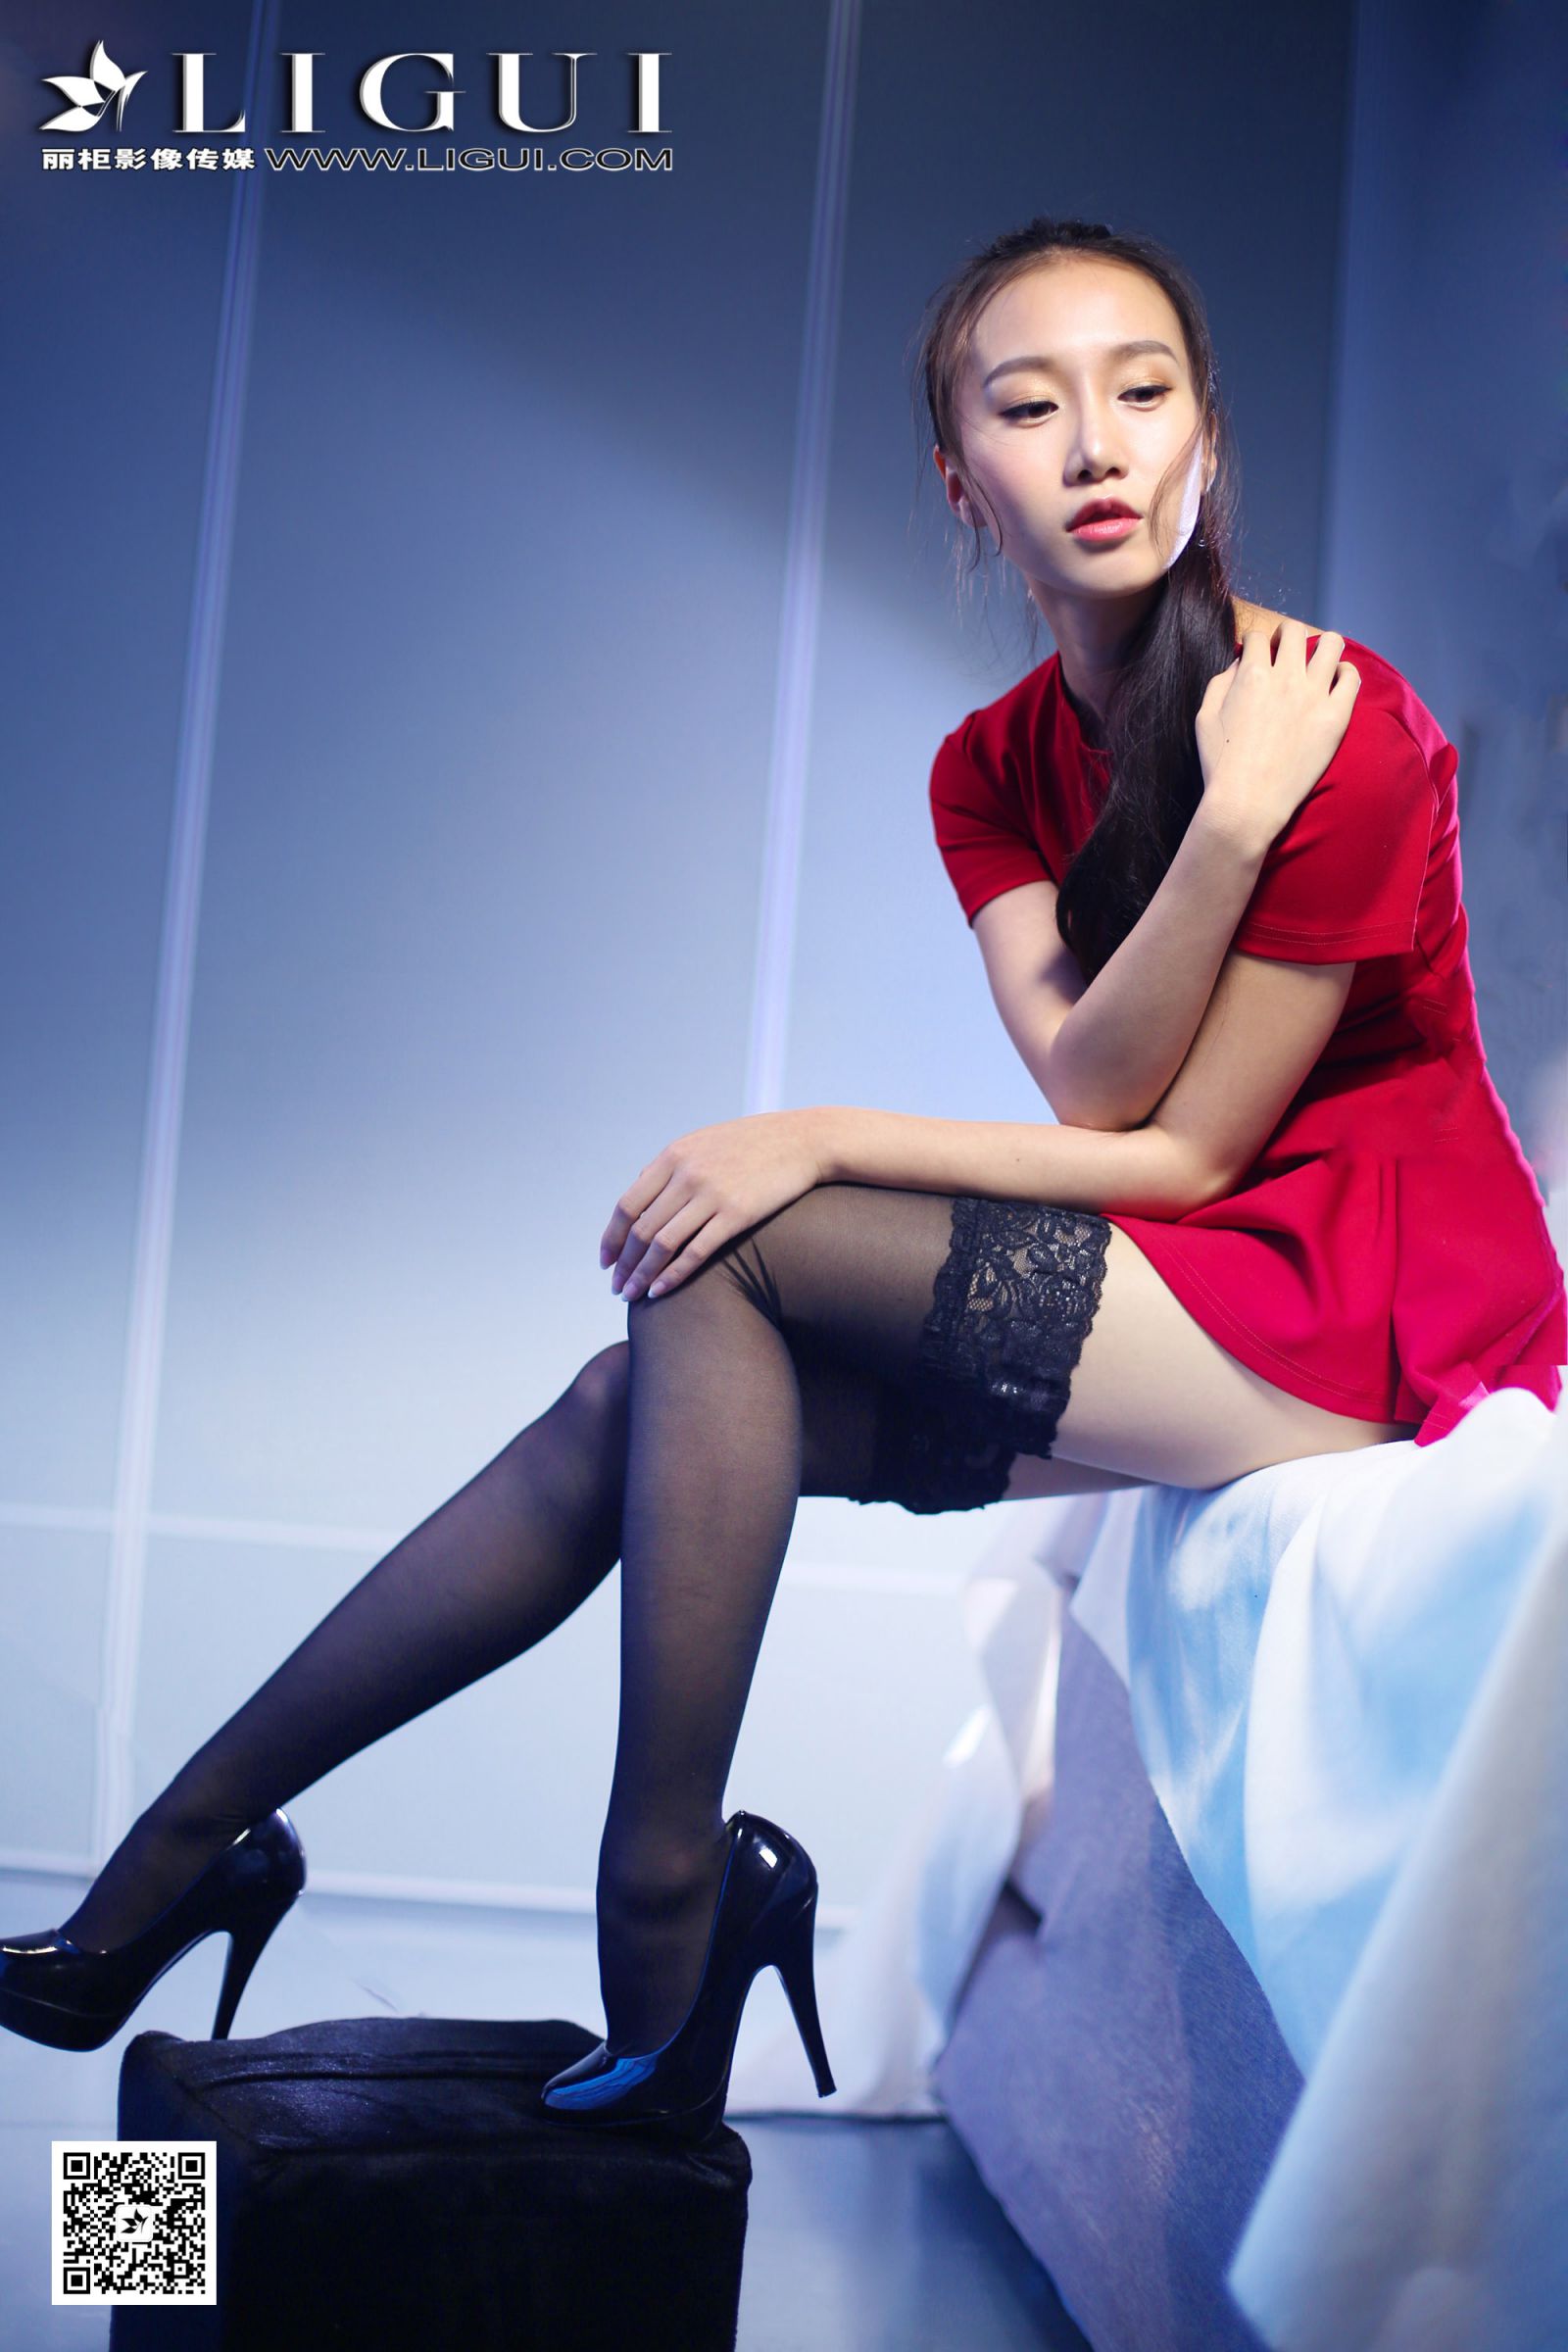 [Ligui丽柜] 网络丽人 Model 红烛 - 黑丝红裙少女[20P]